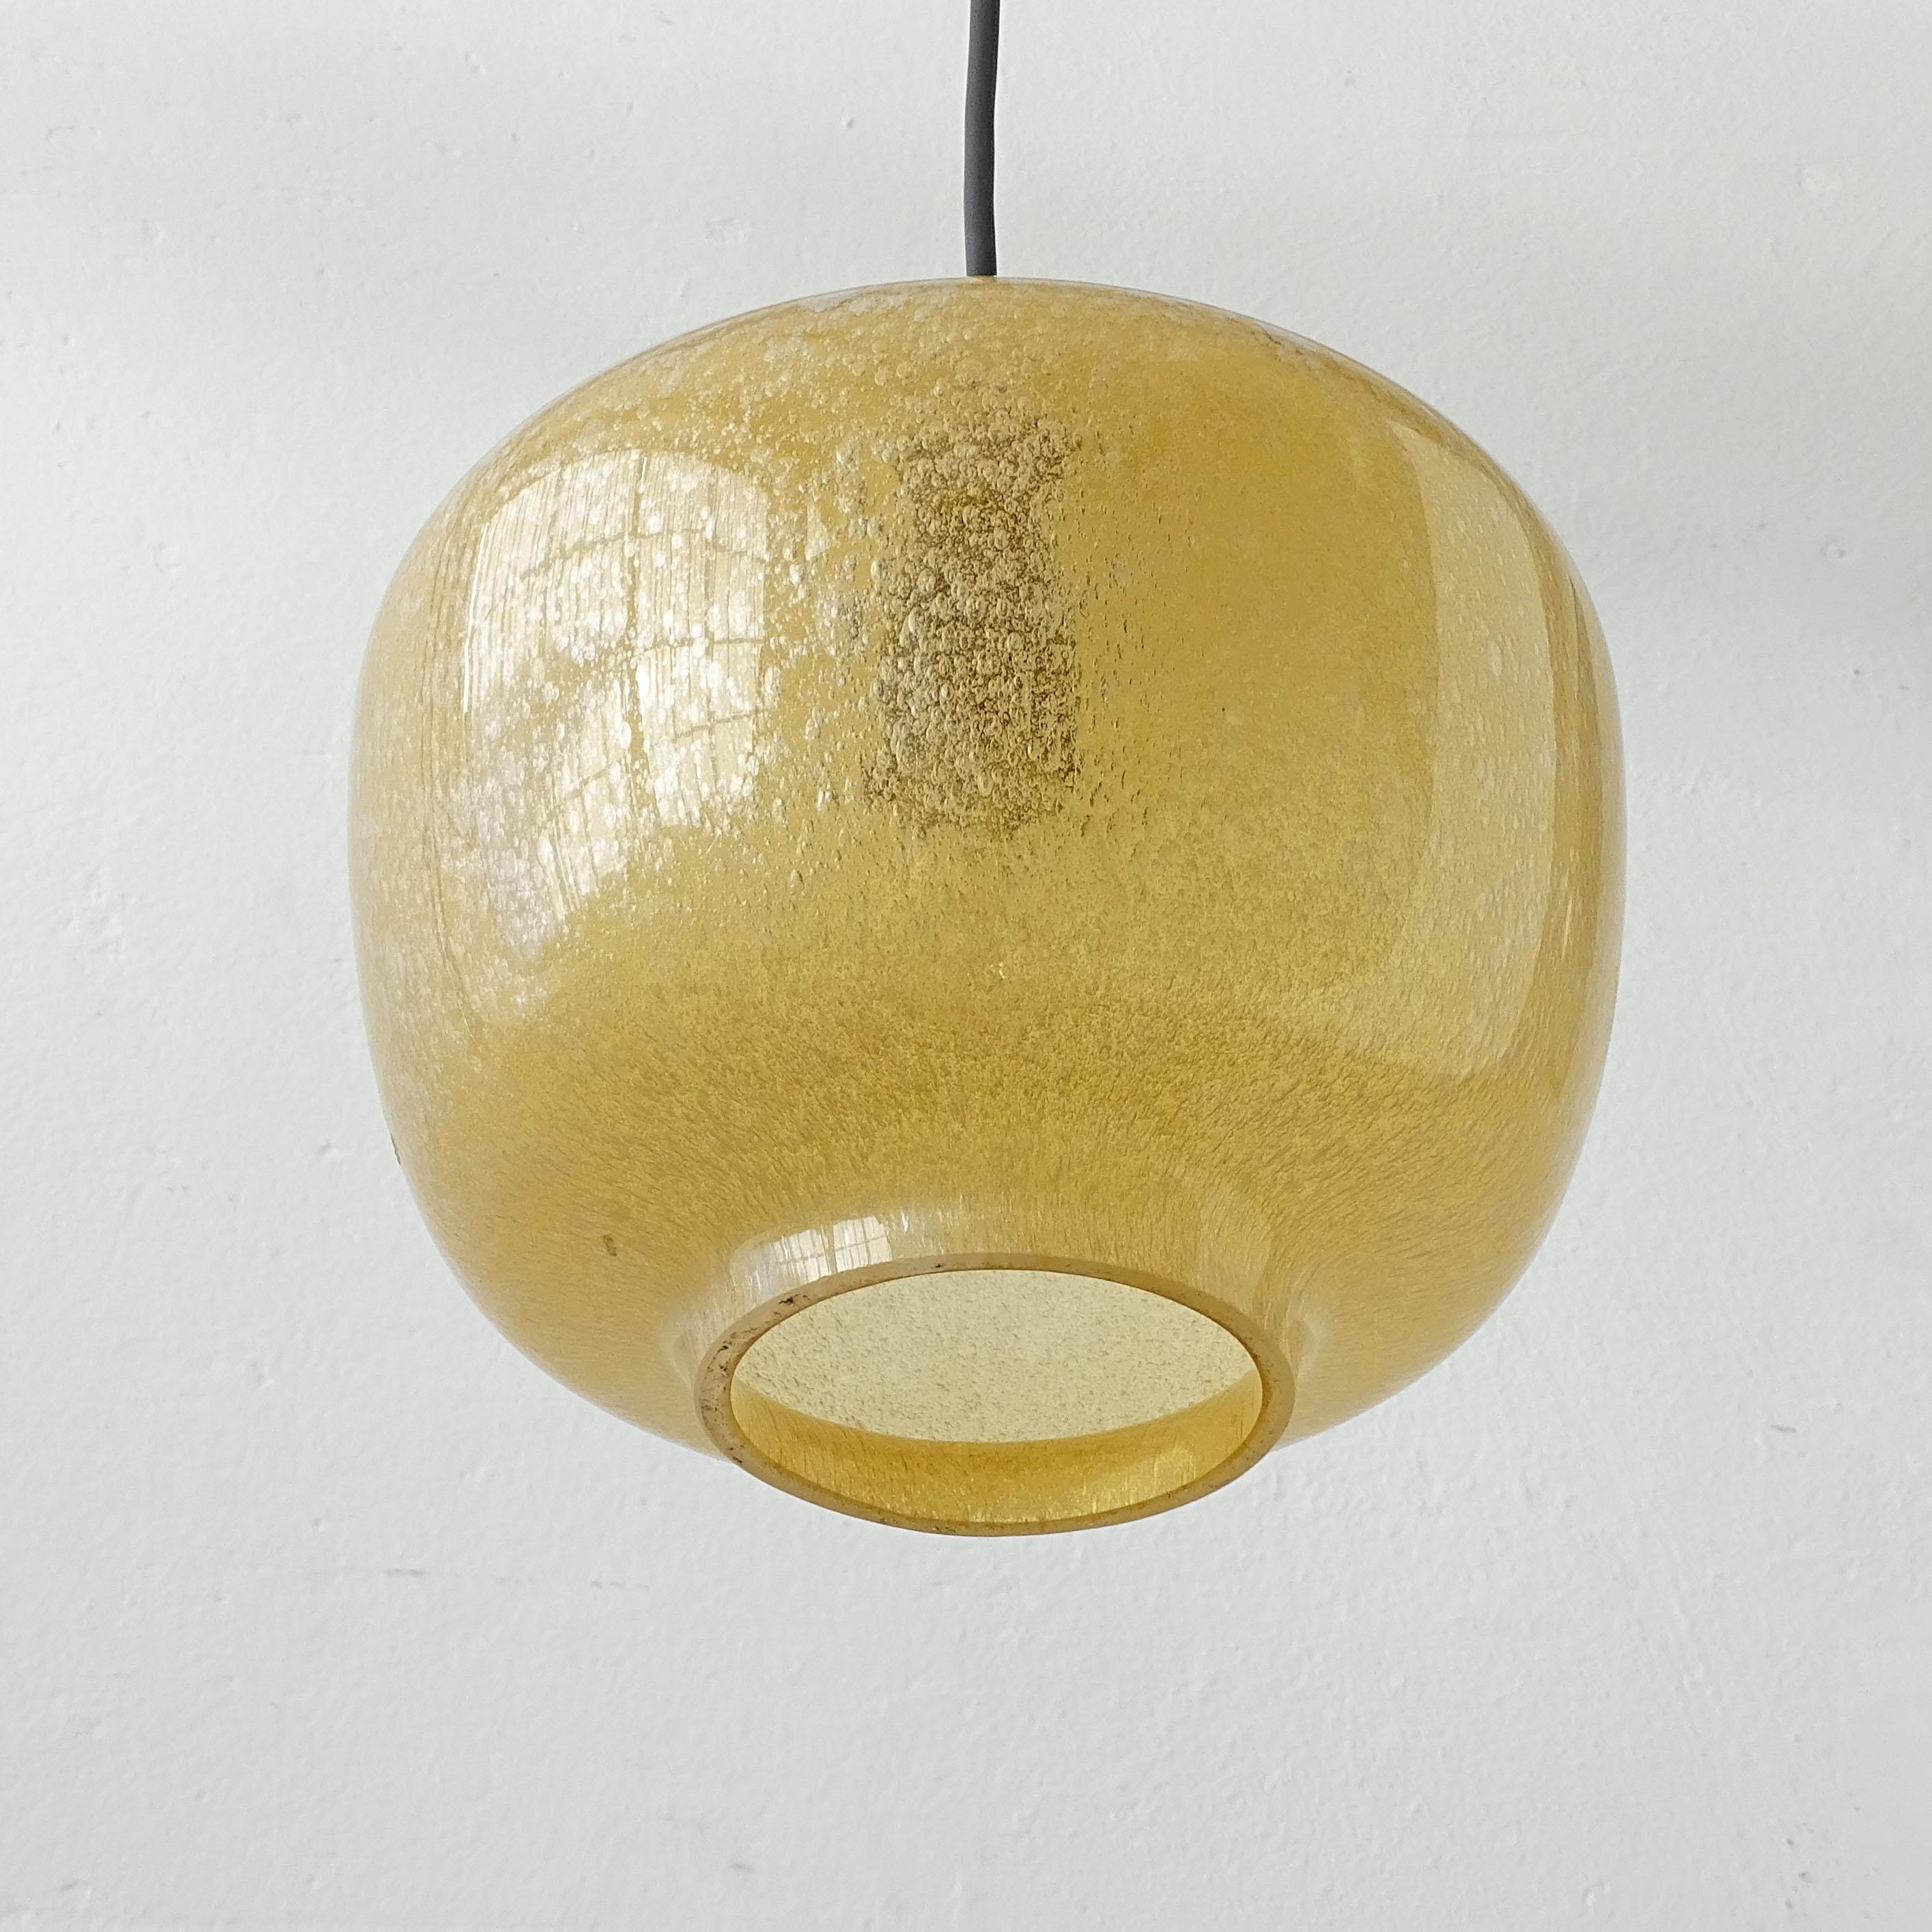 Splendid yellow bollicine Murano glass Seguso pendant lamp